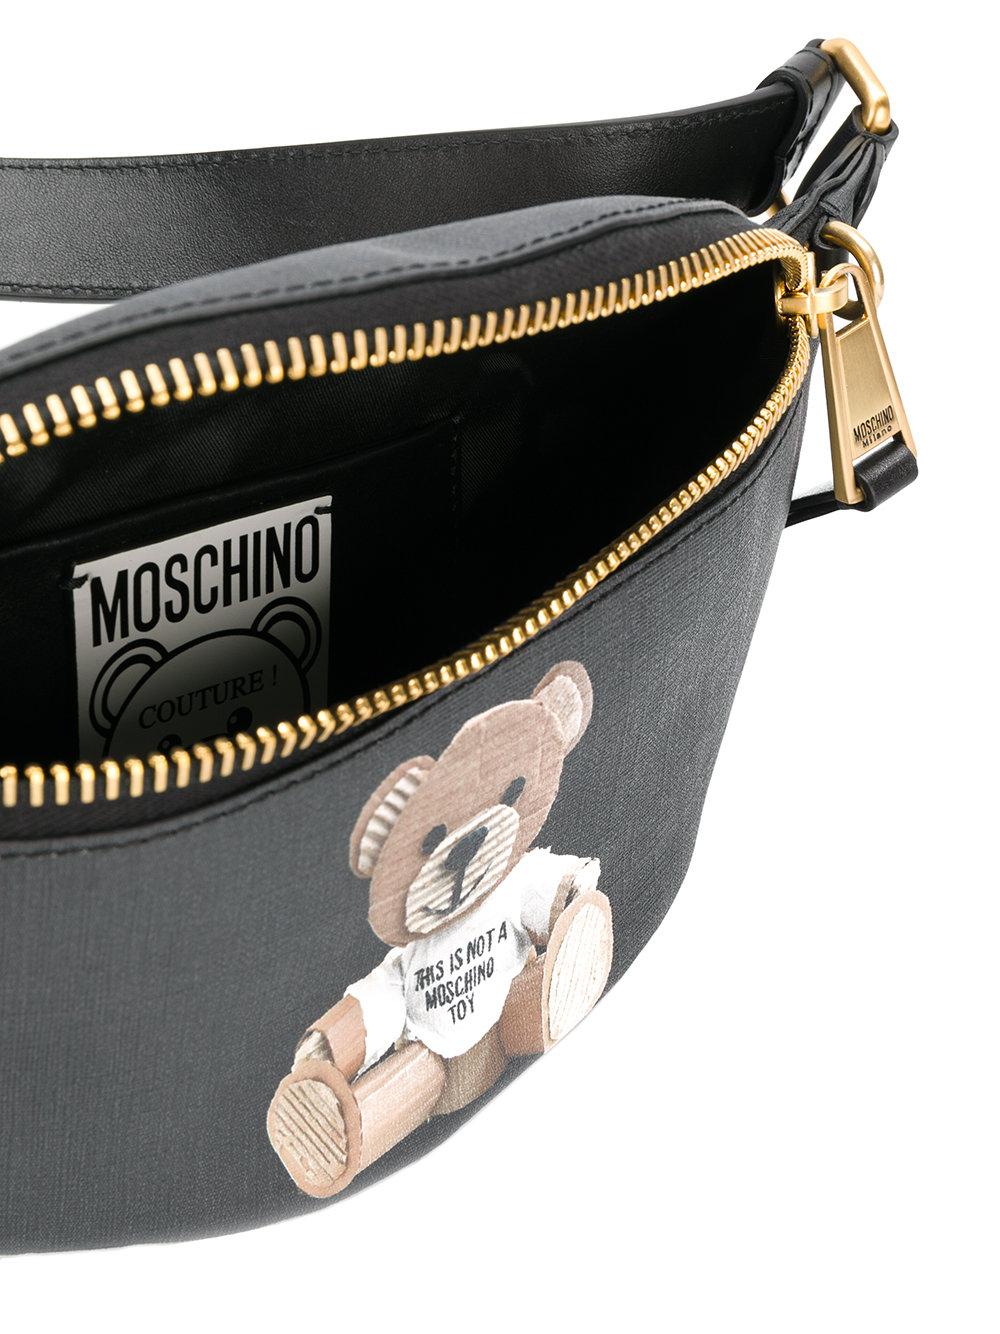 Moschino Leather Teddy Bear Belt Bag in 